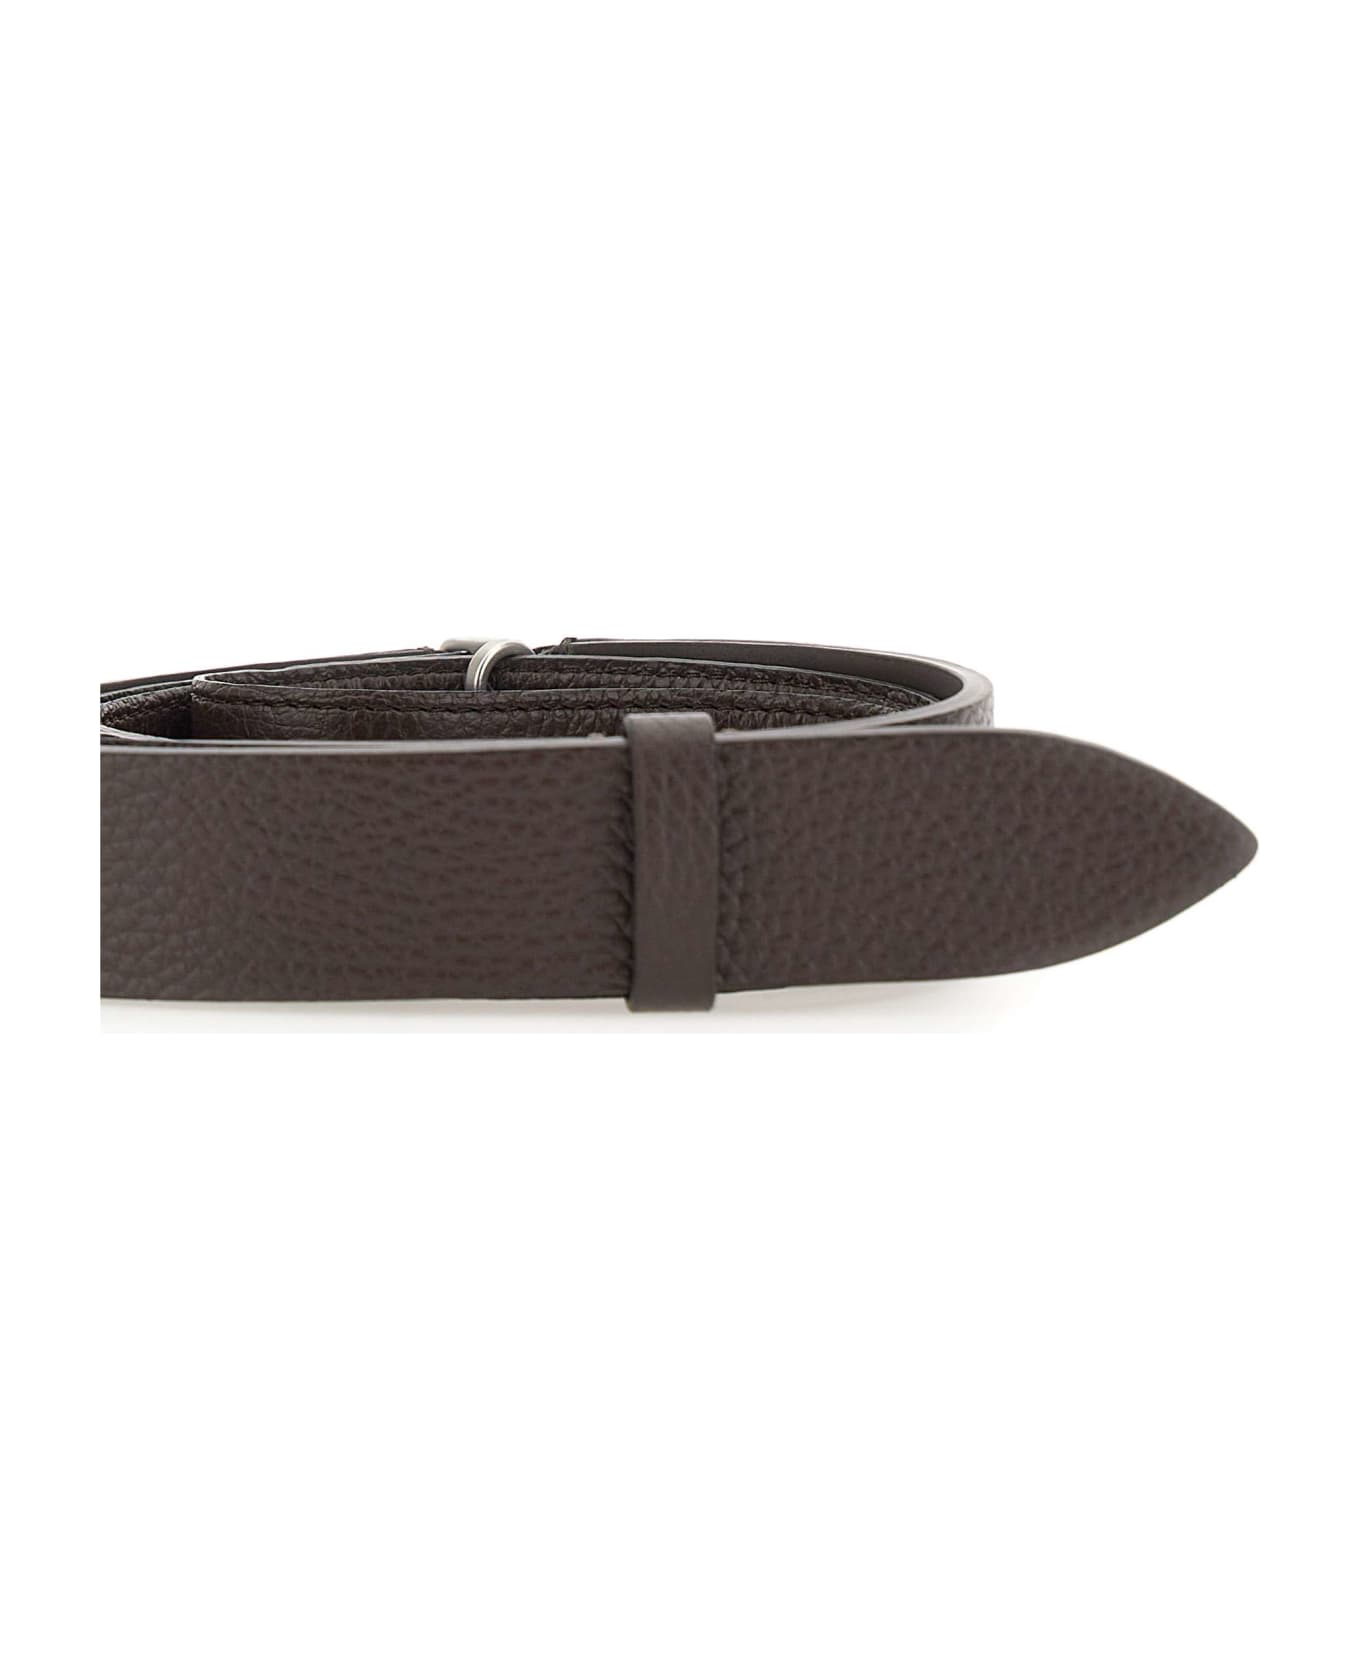 Orciani "nobukle Micron" Leather Belt - BROWN ベルト